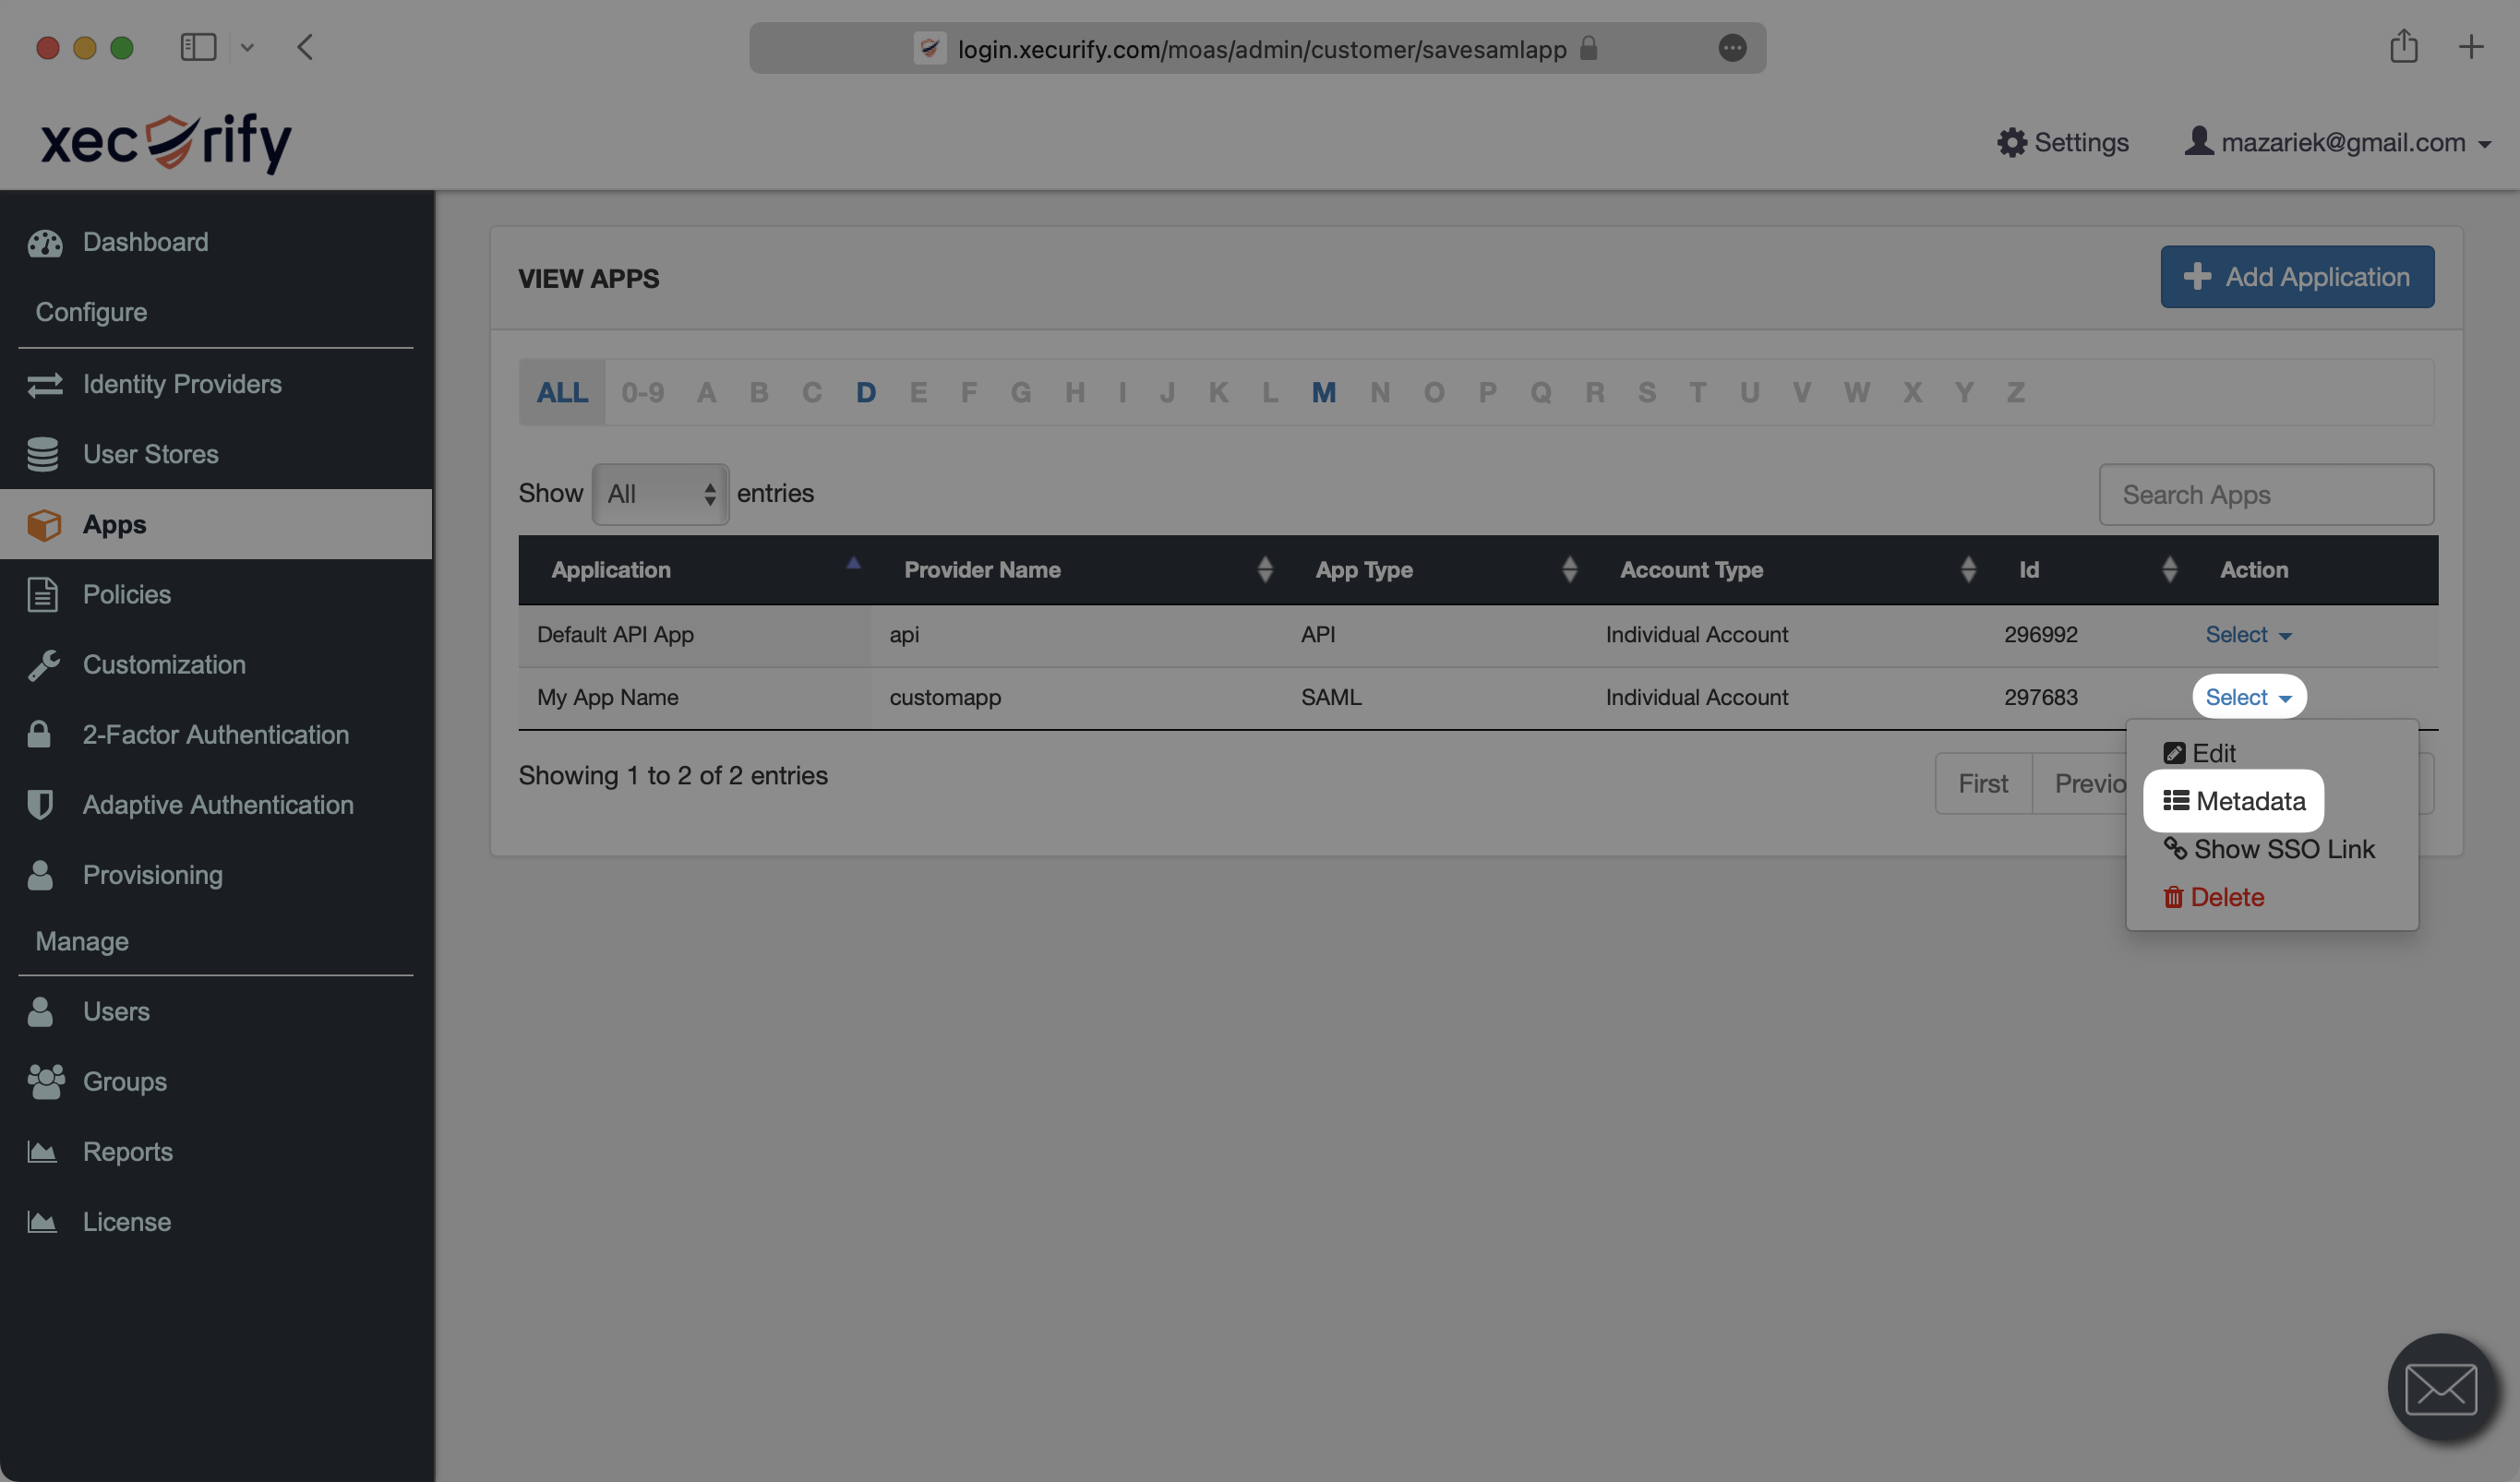 A screenshot highlighting where to select "Metadata" in the miniOrange dashboard.